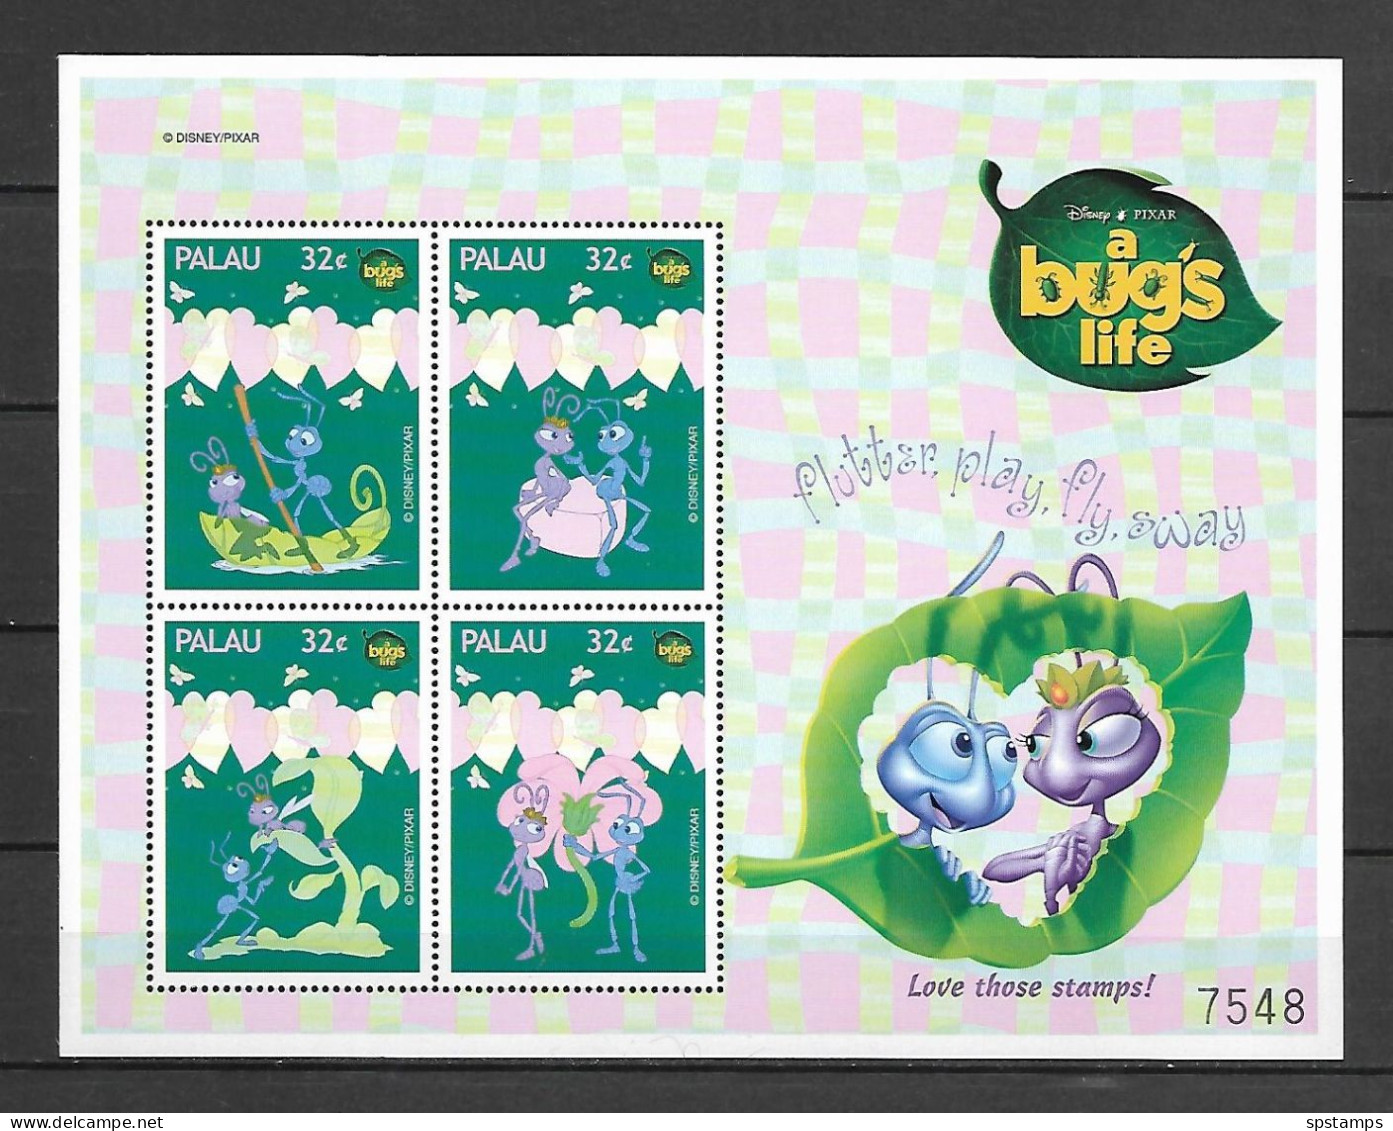 Disney Palau 1998 A Bug's Life Sheetlet #2 MNH - Disney